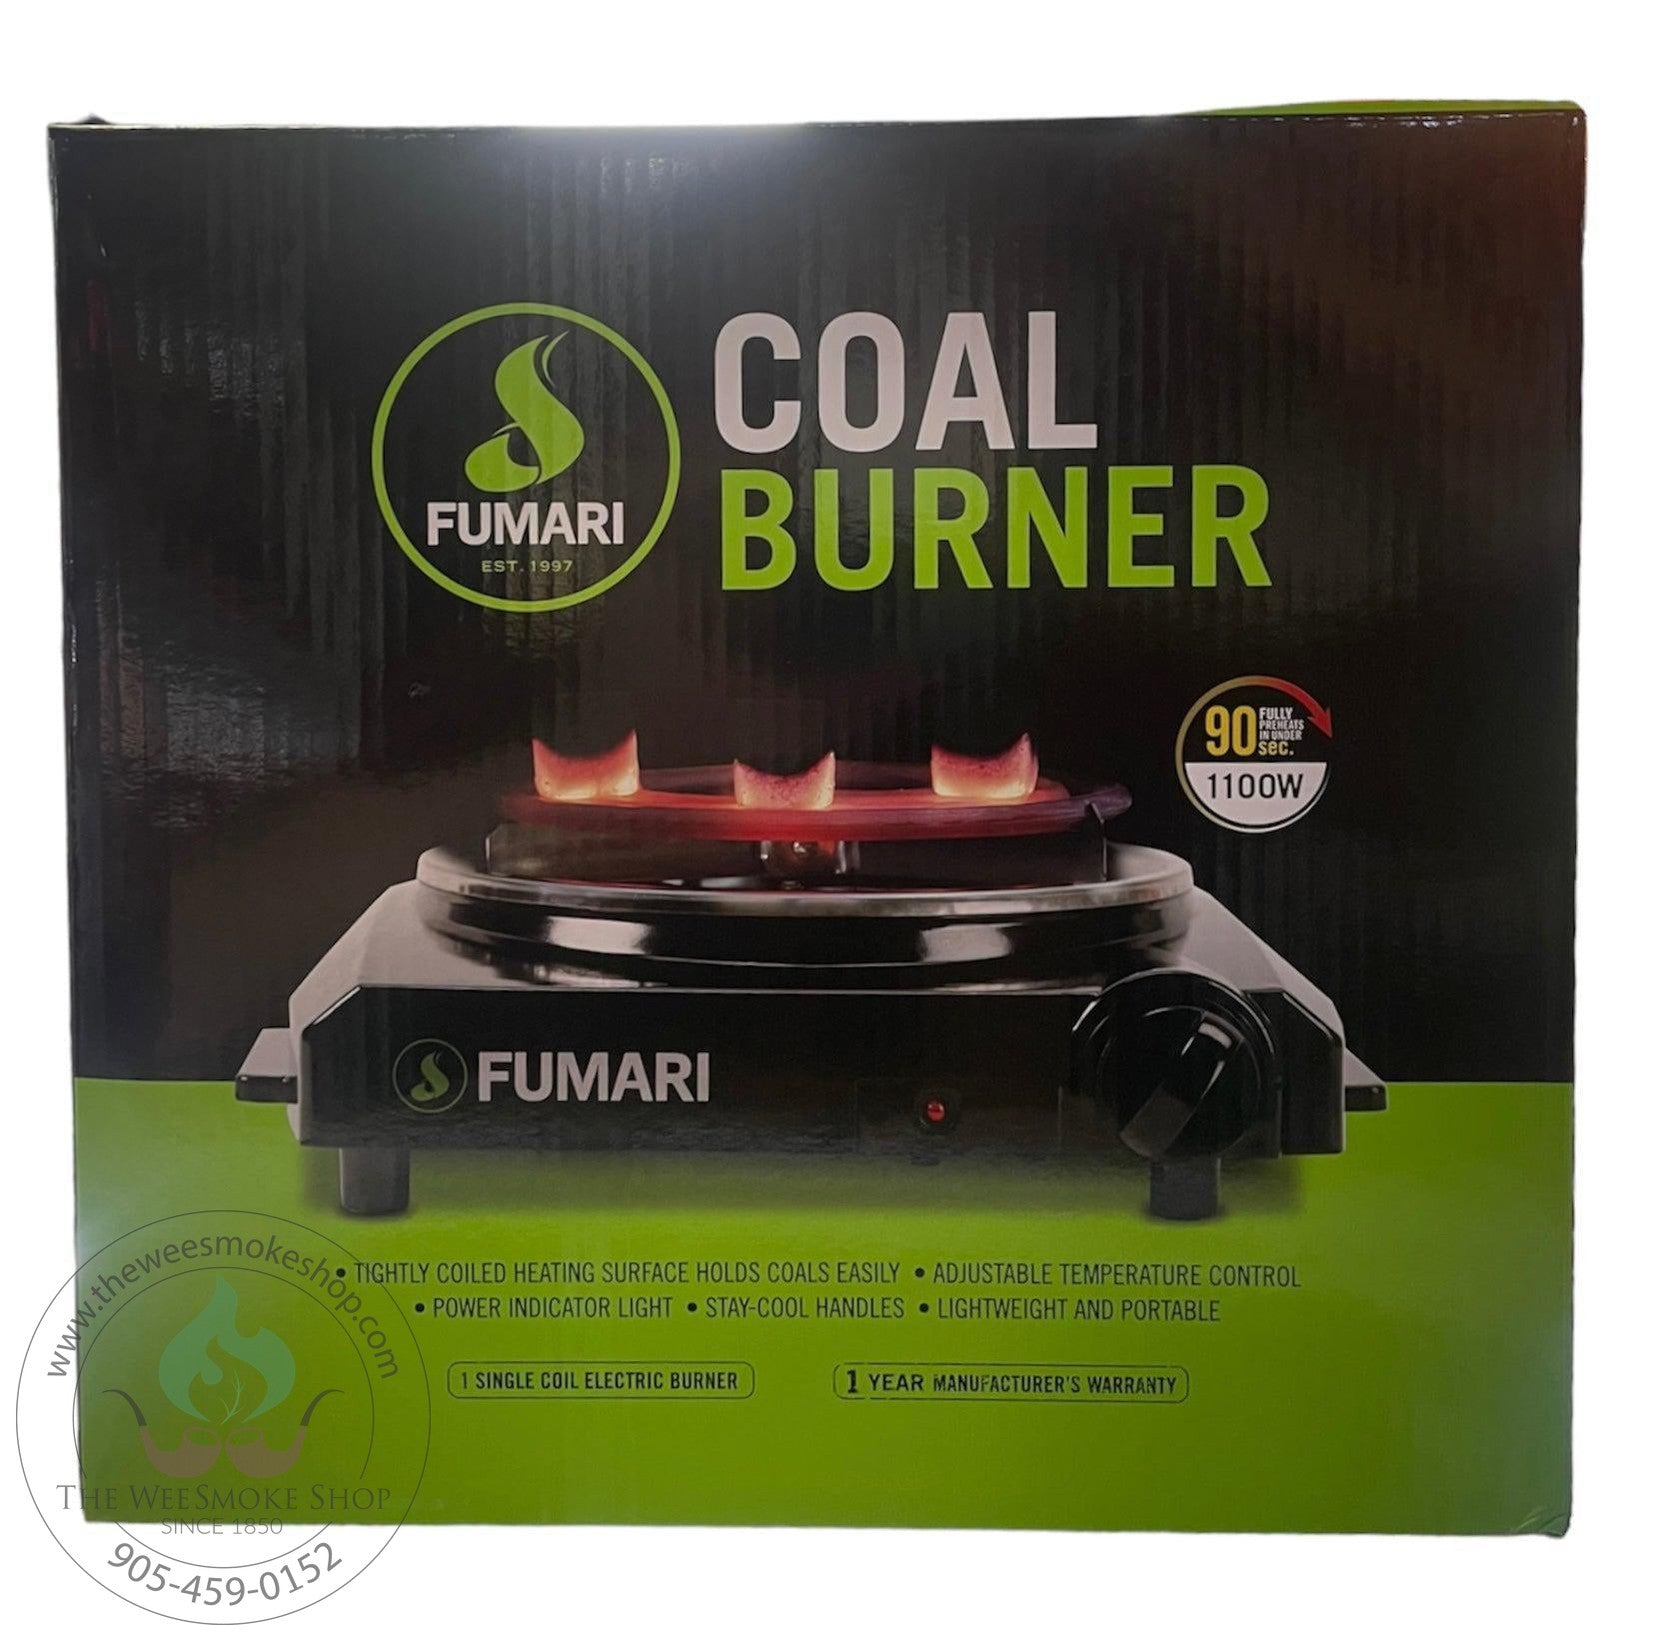 Fumari 1100W Coal Burner - the Wee Smoke Shop